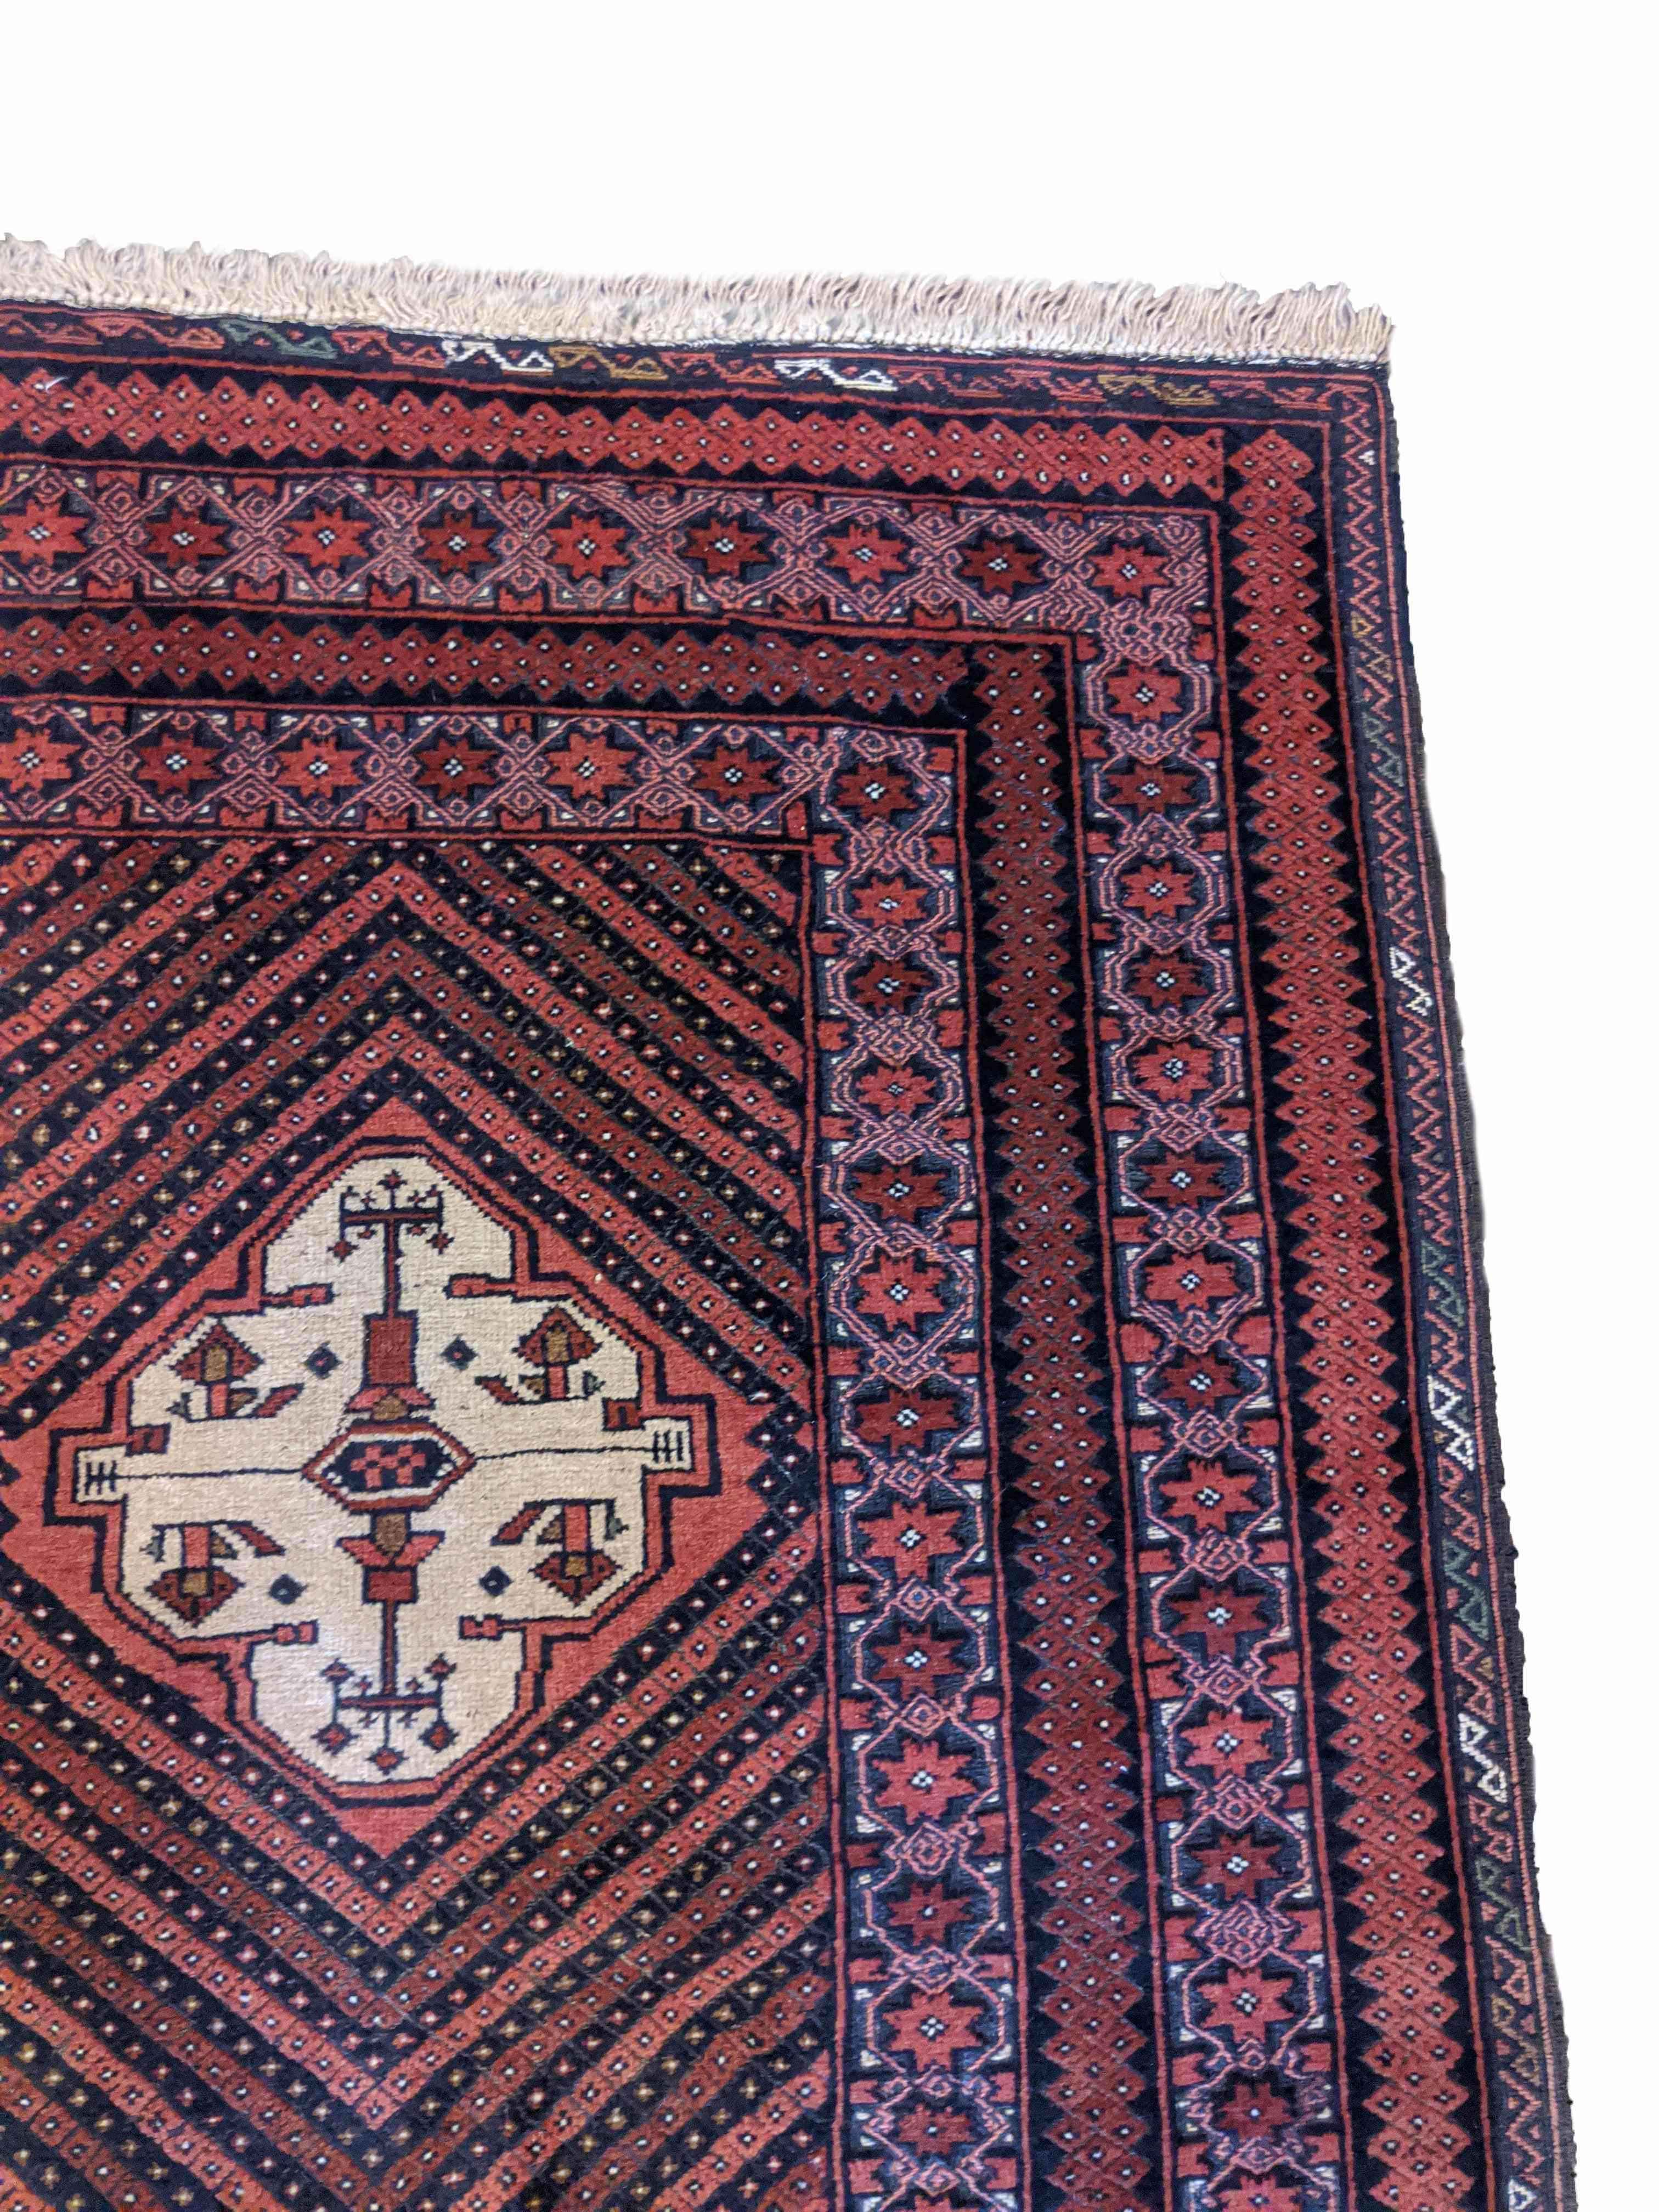 135 x 118 cm Afghan Mushwani Tribal Red Rug - Rugmaster